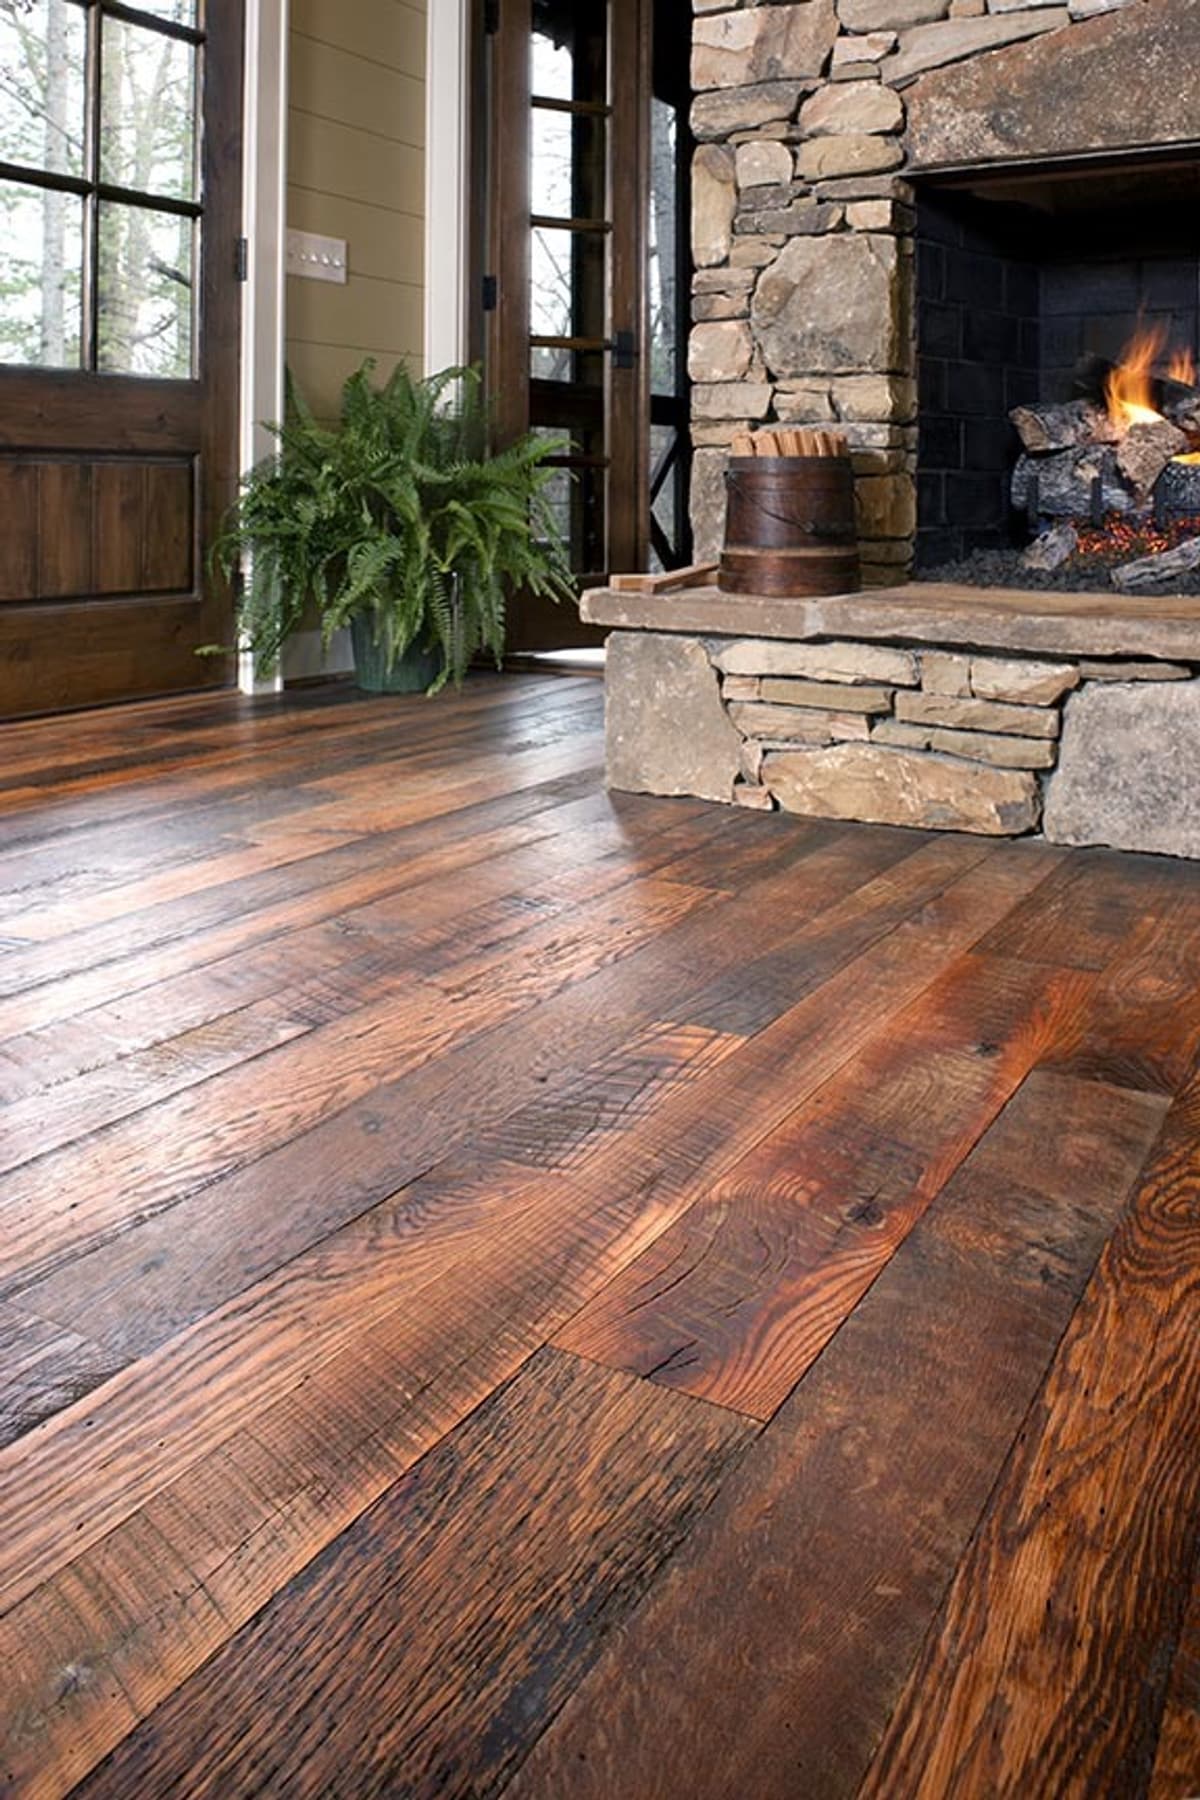 Reclaimed rustic oak flooring in living room in Flat Rock North Carolina home.